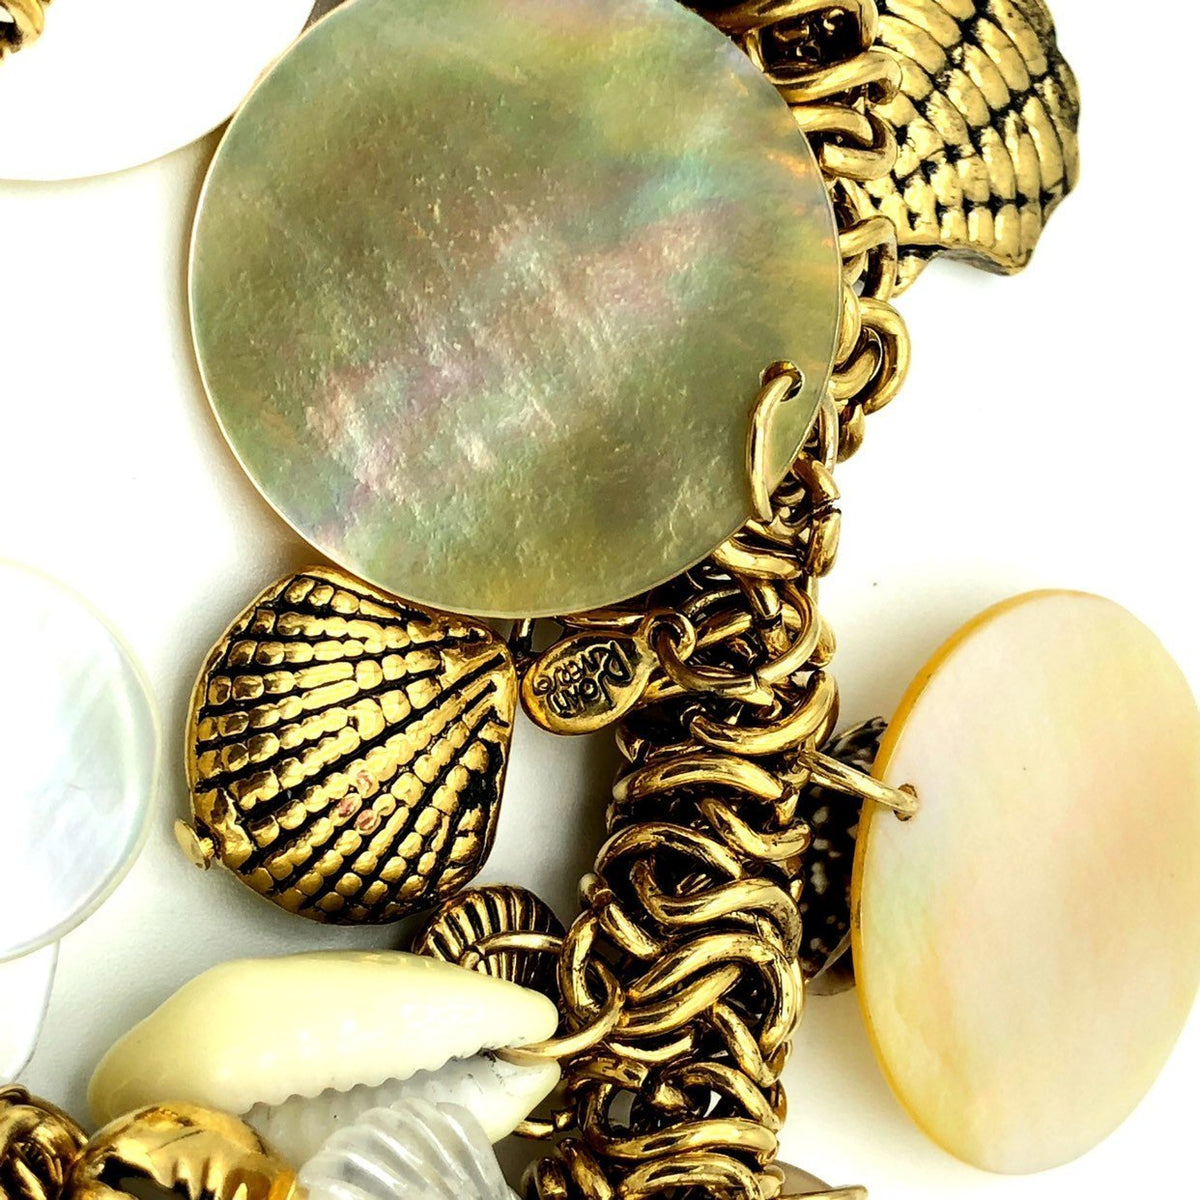 Joan Rivers Seashell Vintage Stretch Charm Bracelet - 24 Wishes Vintage Jewelry